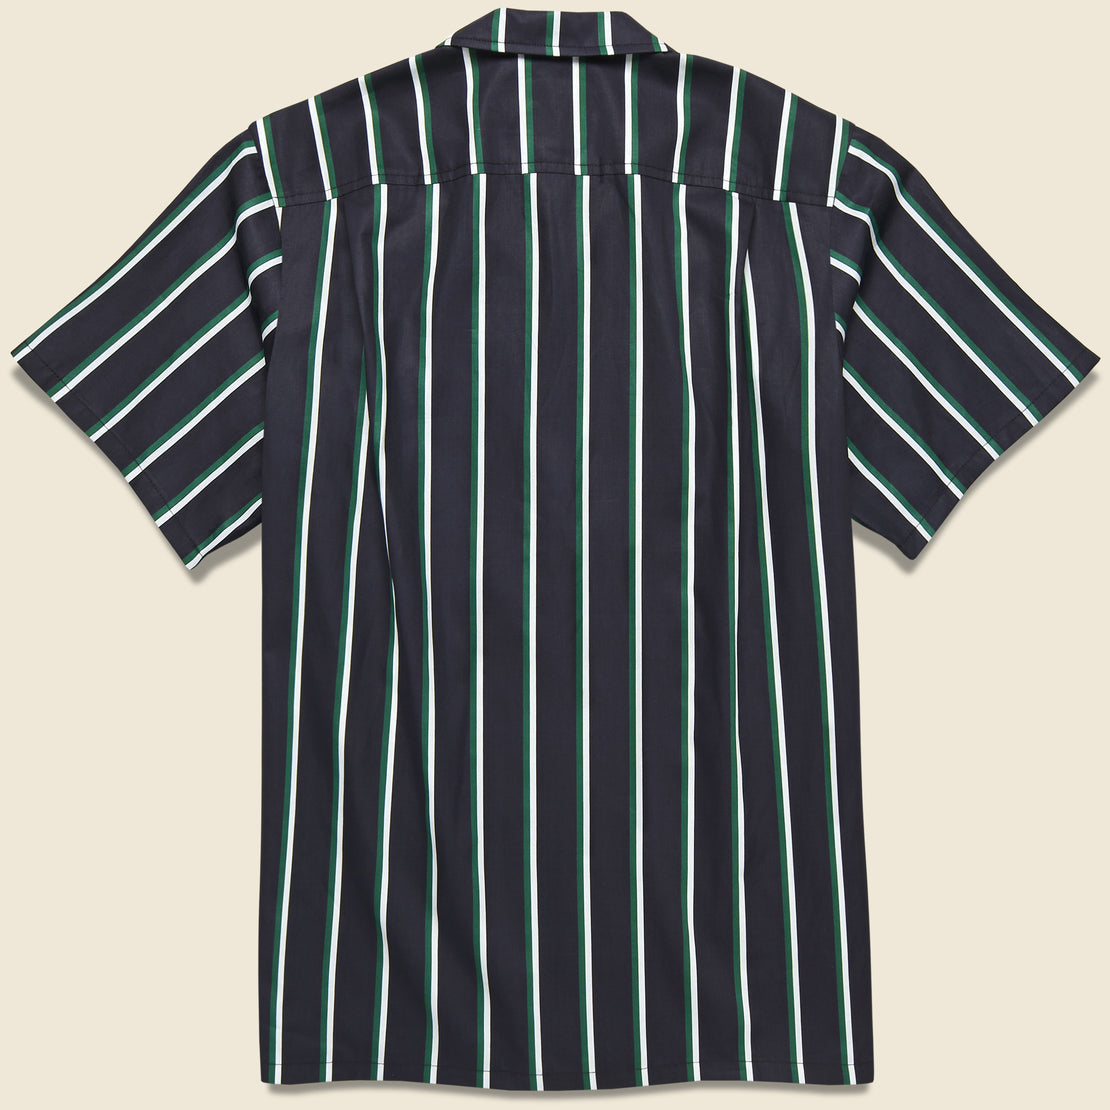 Fine Stripe Camp Shirt - Black/Green/White - Bather - STAG Provisions - Tops - S/S Woven - Stripe